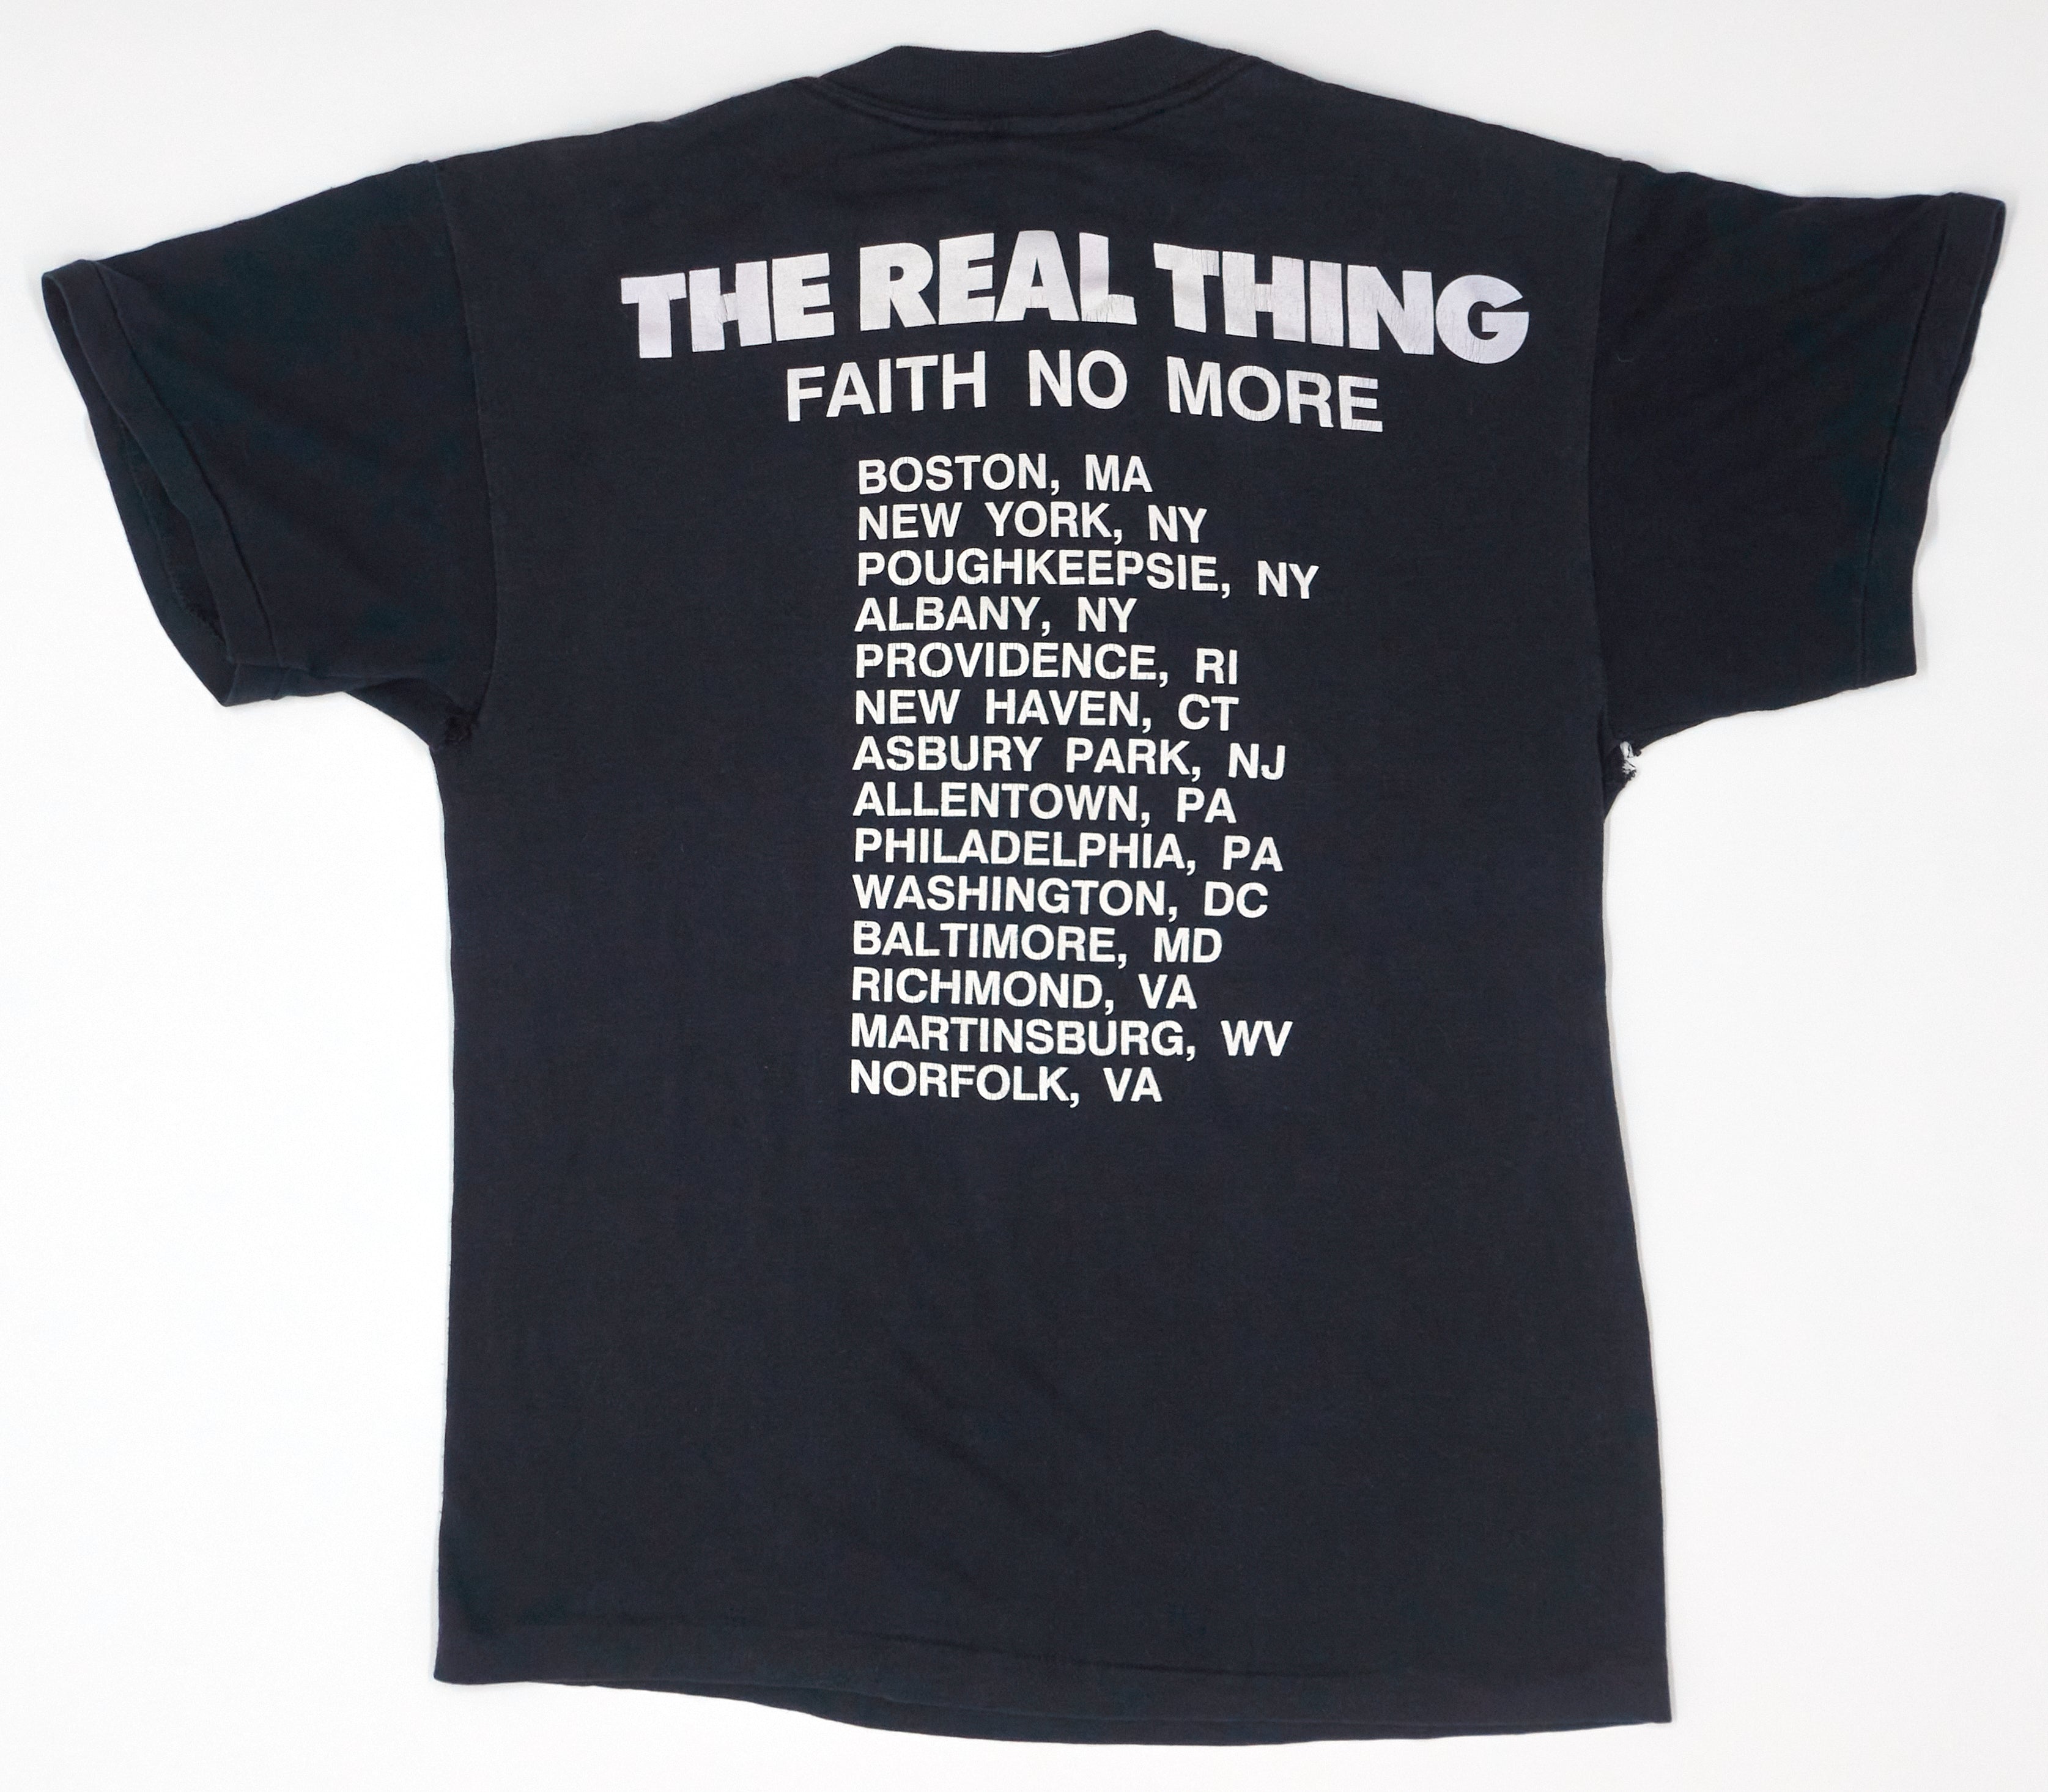 Faith No More - The Real Thing 1989 USA Tour Shirt Size Medium